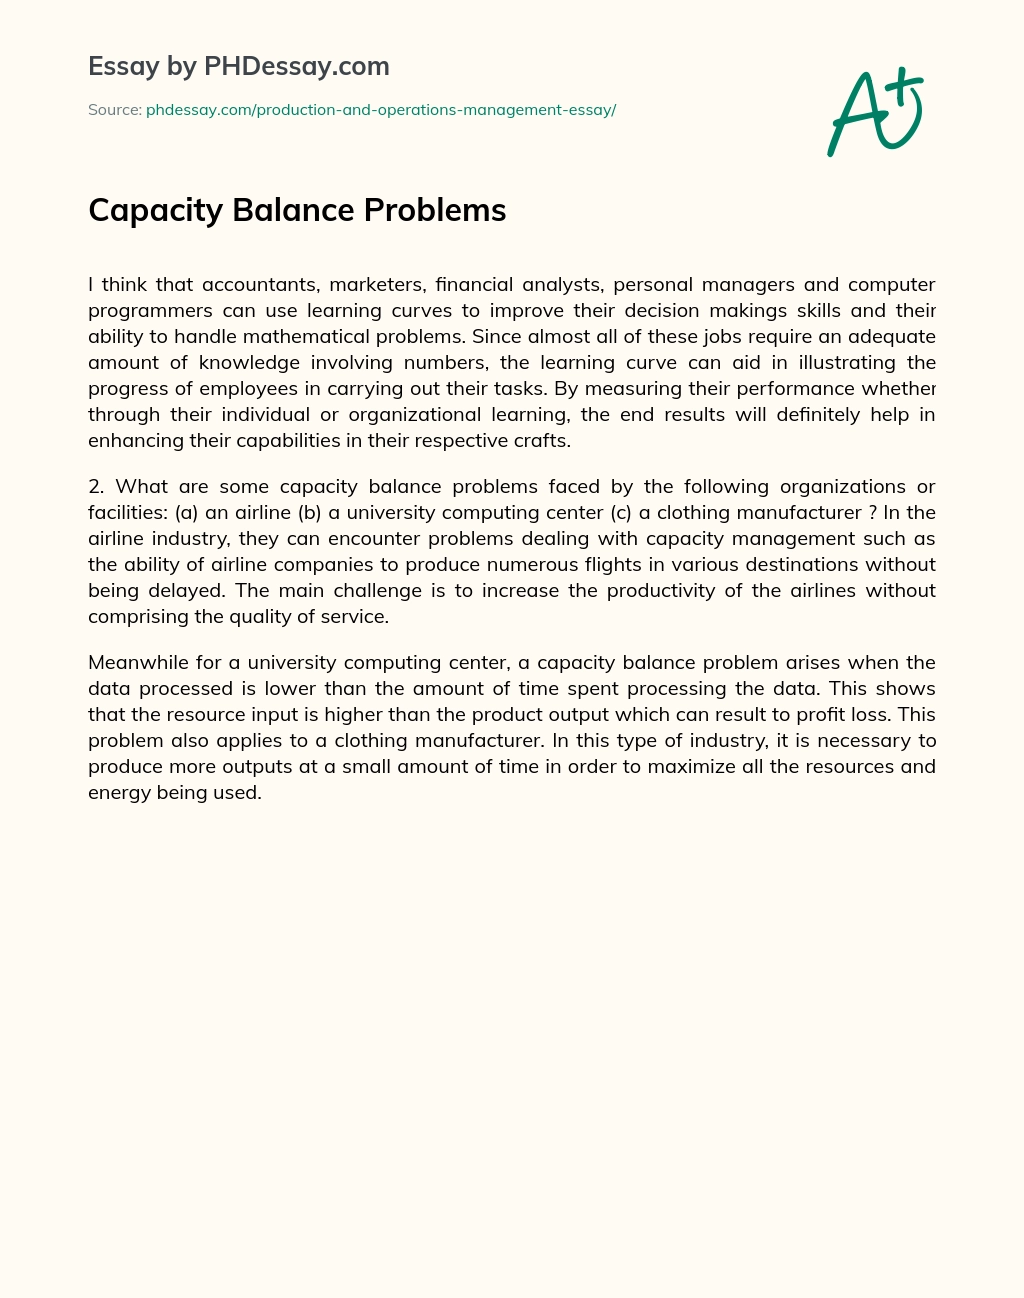 Capacity Balance Problems essay